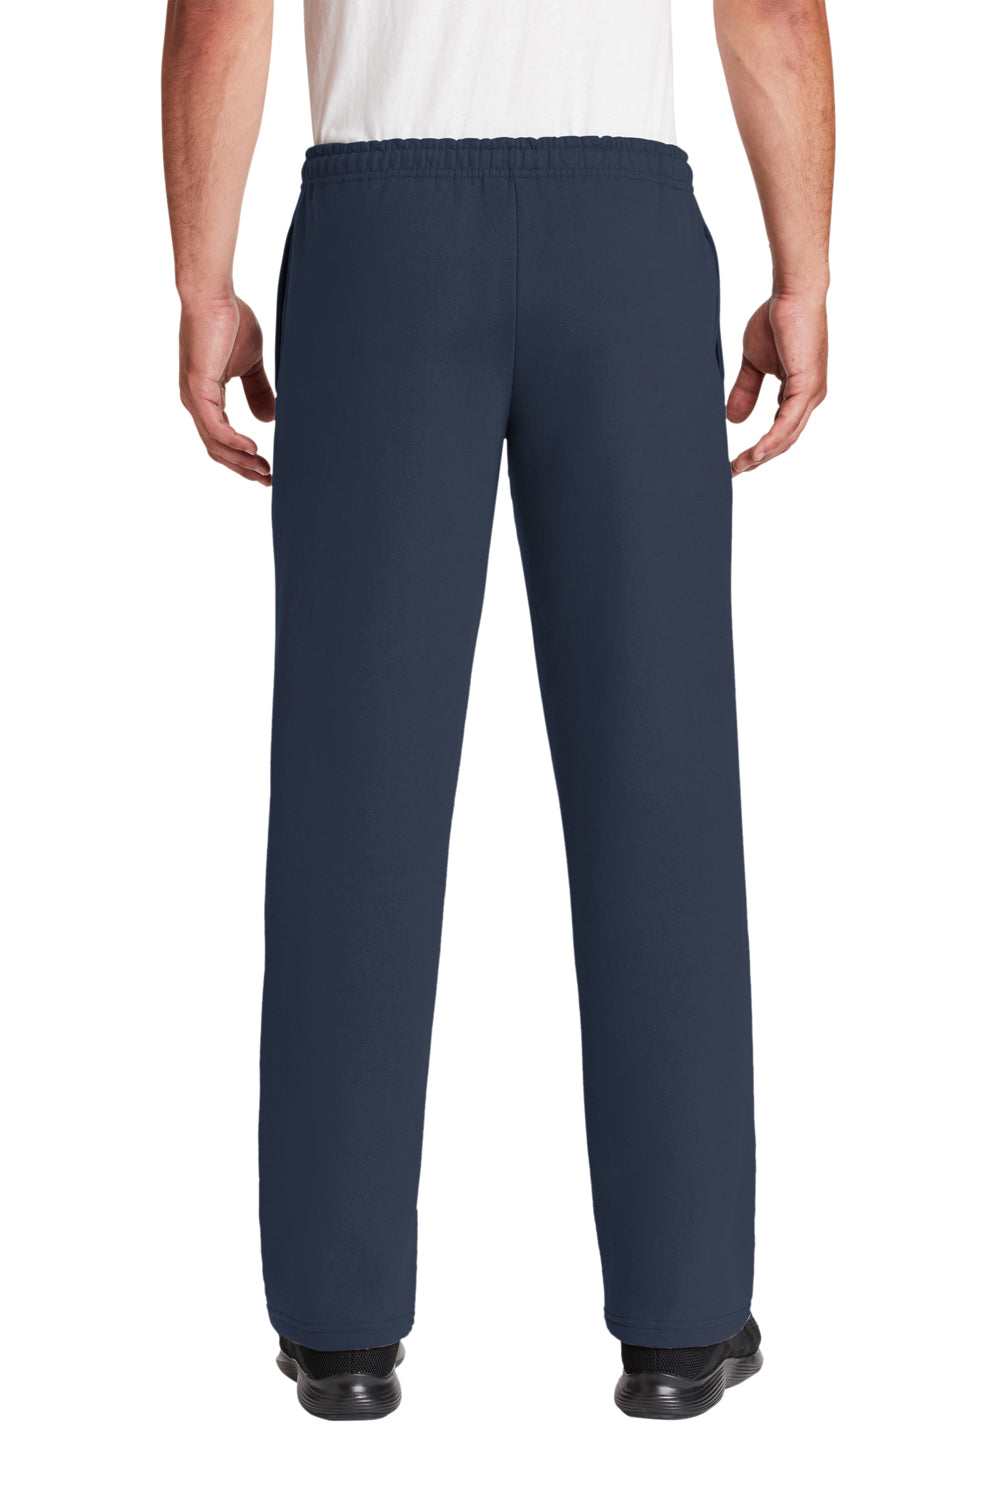 Gildan 12300 DryBlend Open Bottom Sweatpants w/ Pocket Navy Blue Back